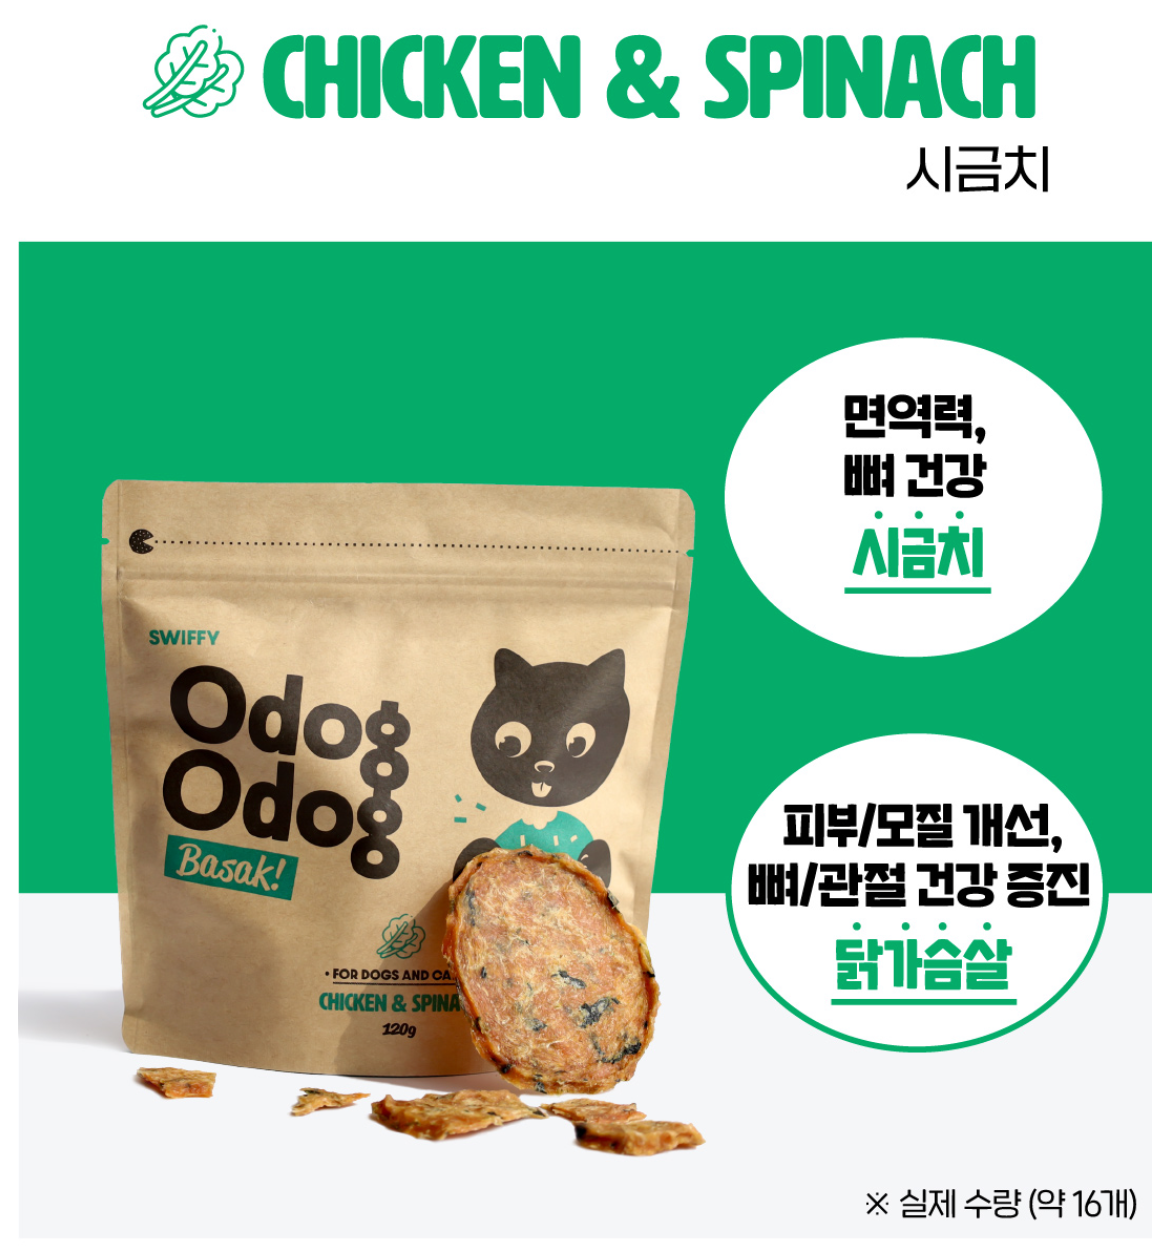 SWIFFY Odog Odog Crispy - Chicken & Spinach